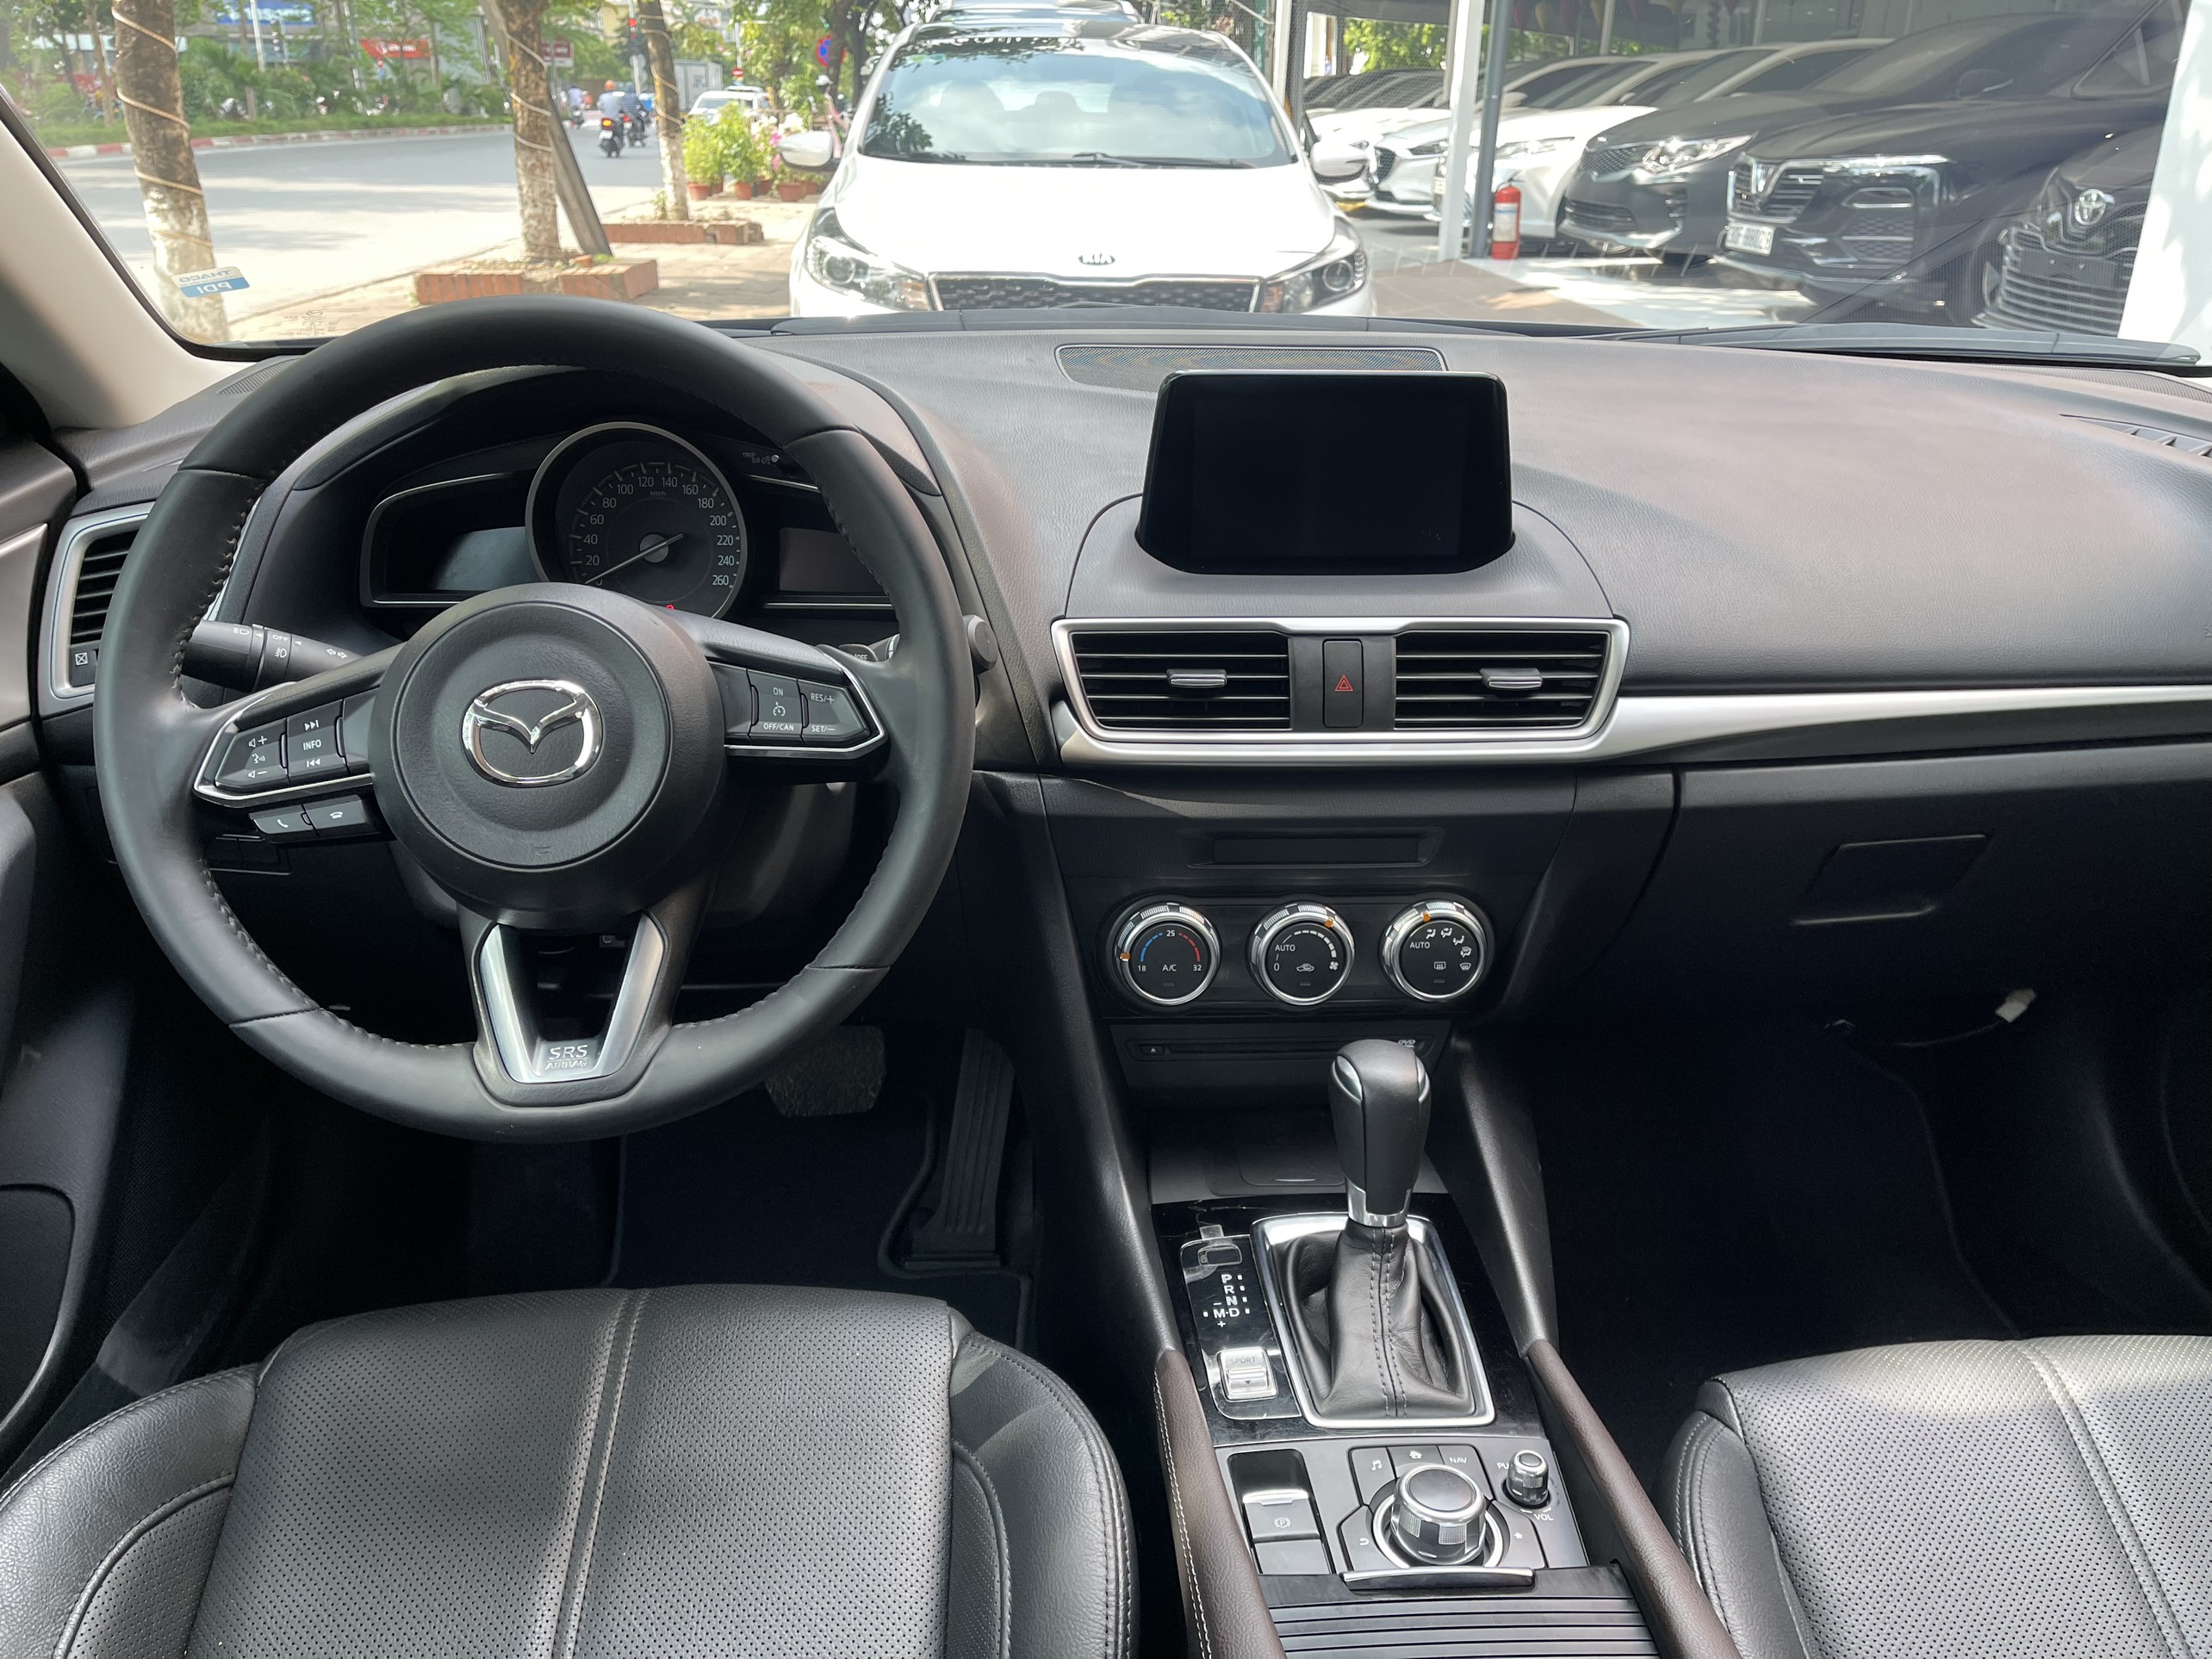 Mazda 3 Sedan 1.5AT 2018 - 6